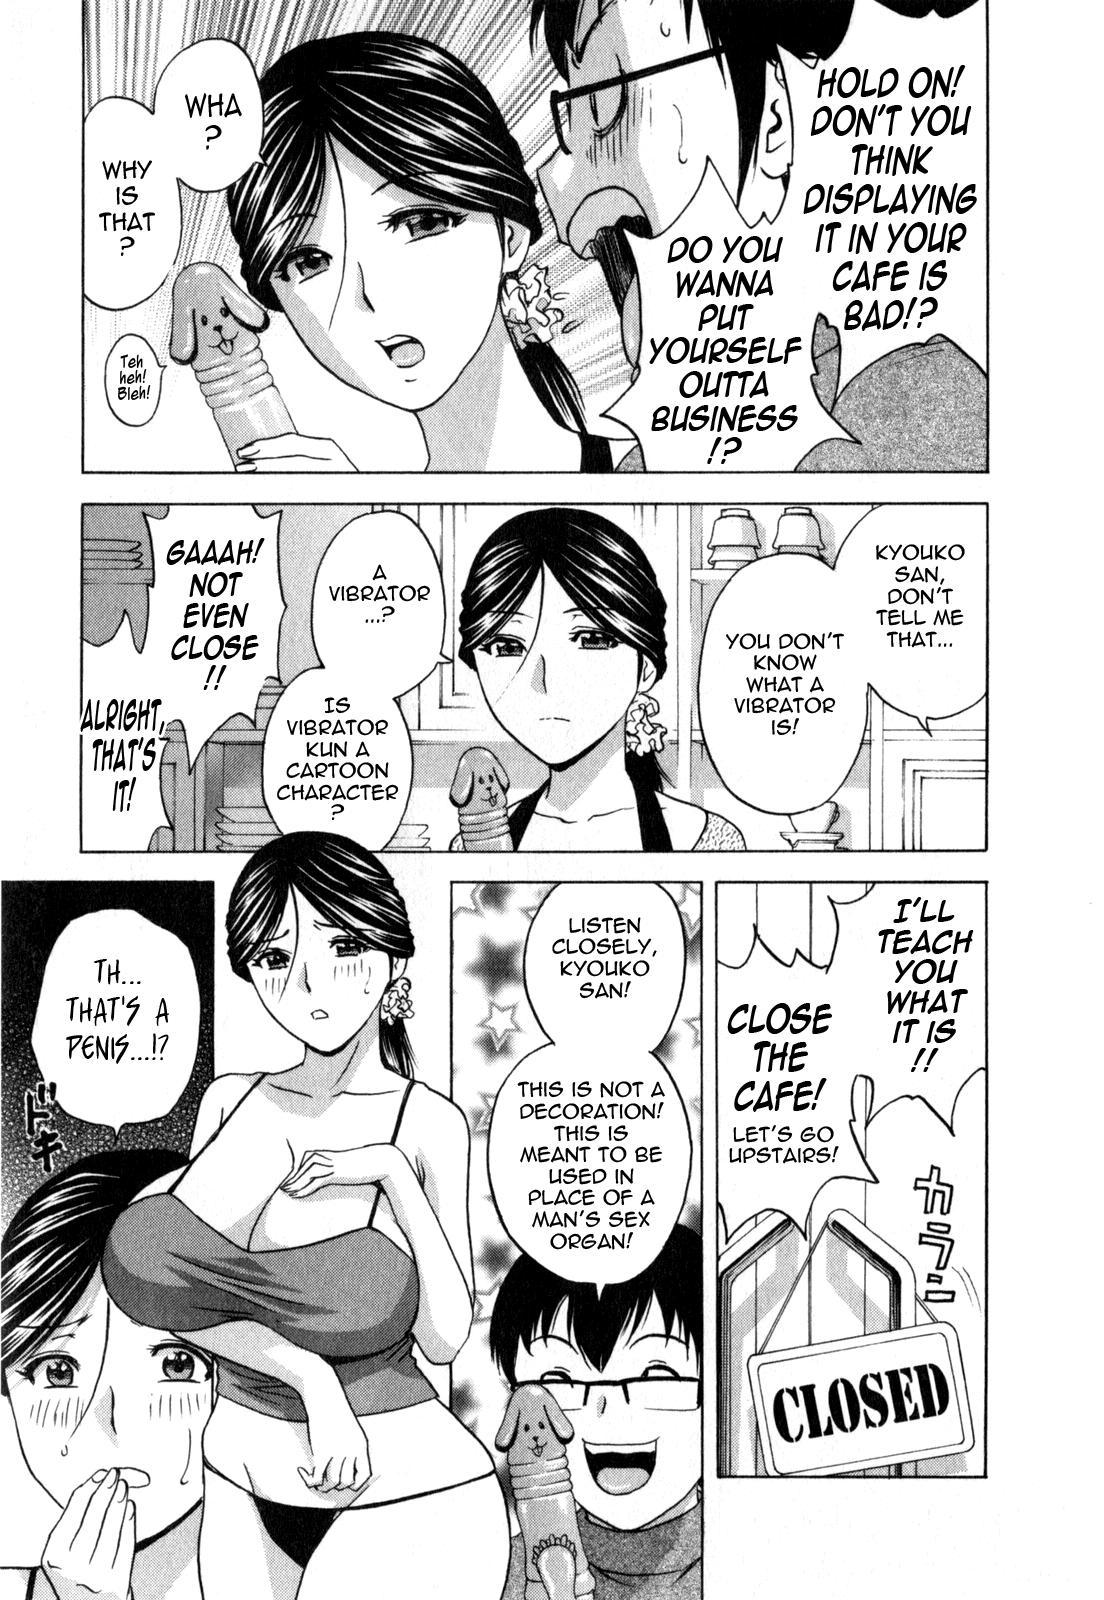 [Hidemaru] Life with Married Women Just Like a Manga 3 - Ch. 1-4 [English] {Tadanohito} 16